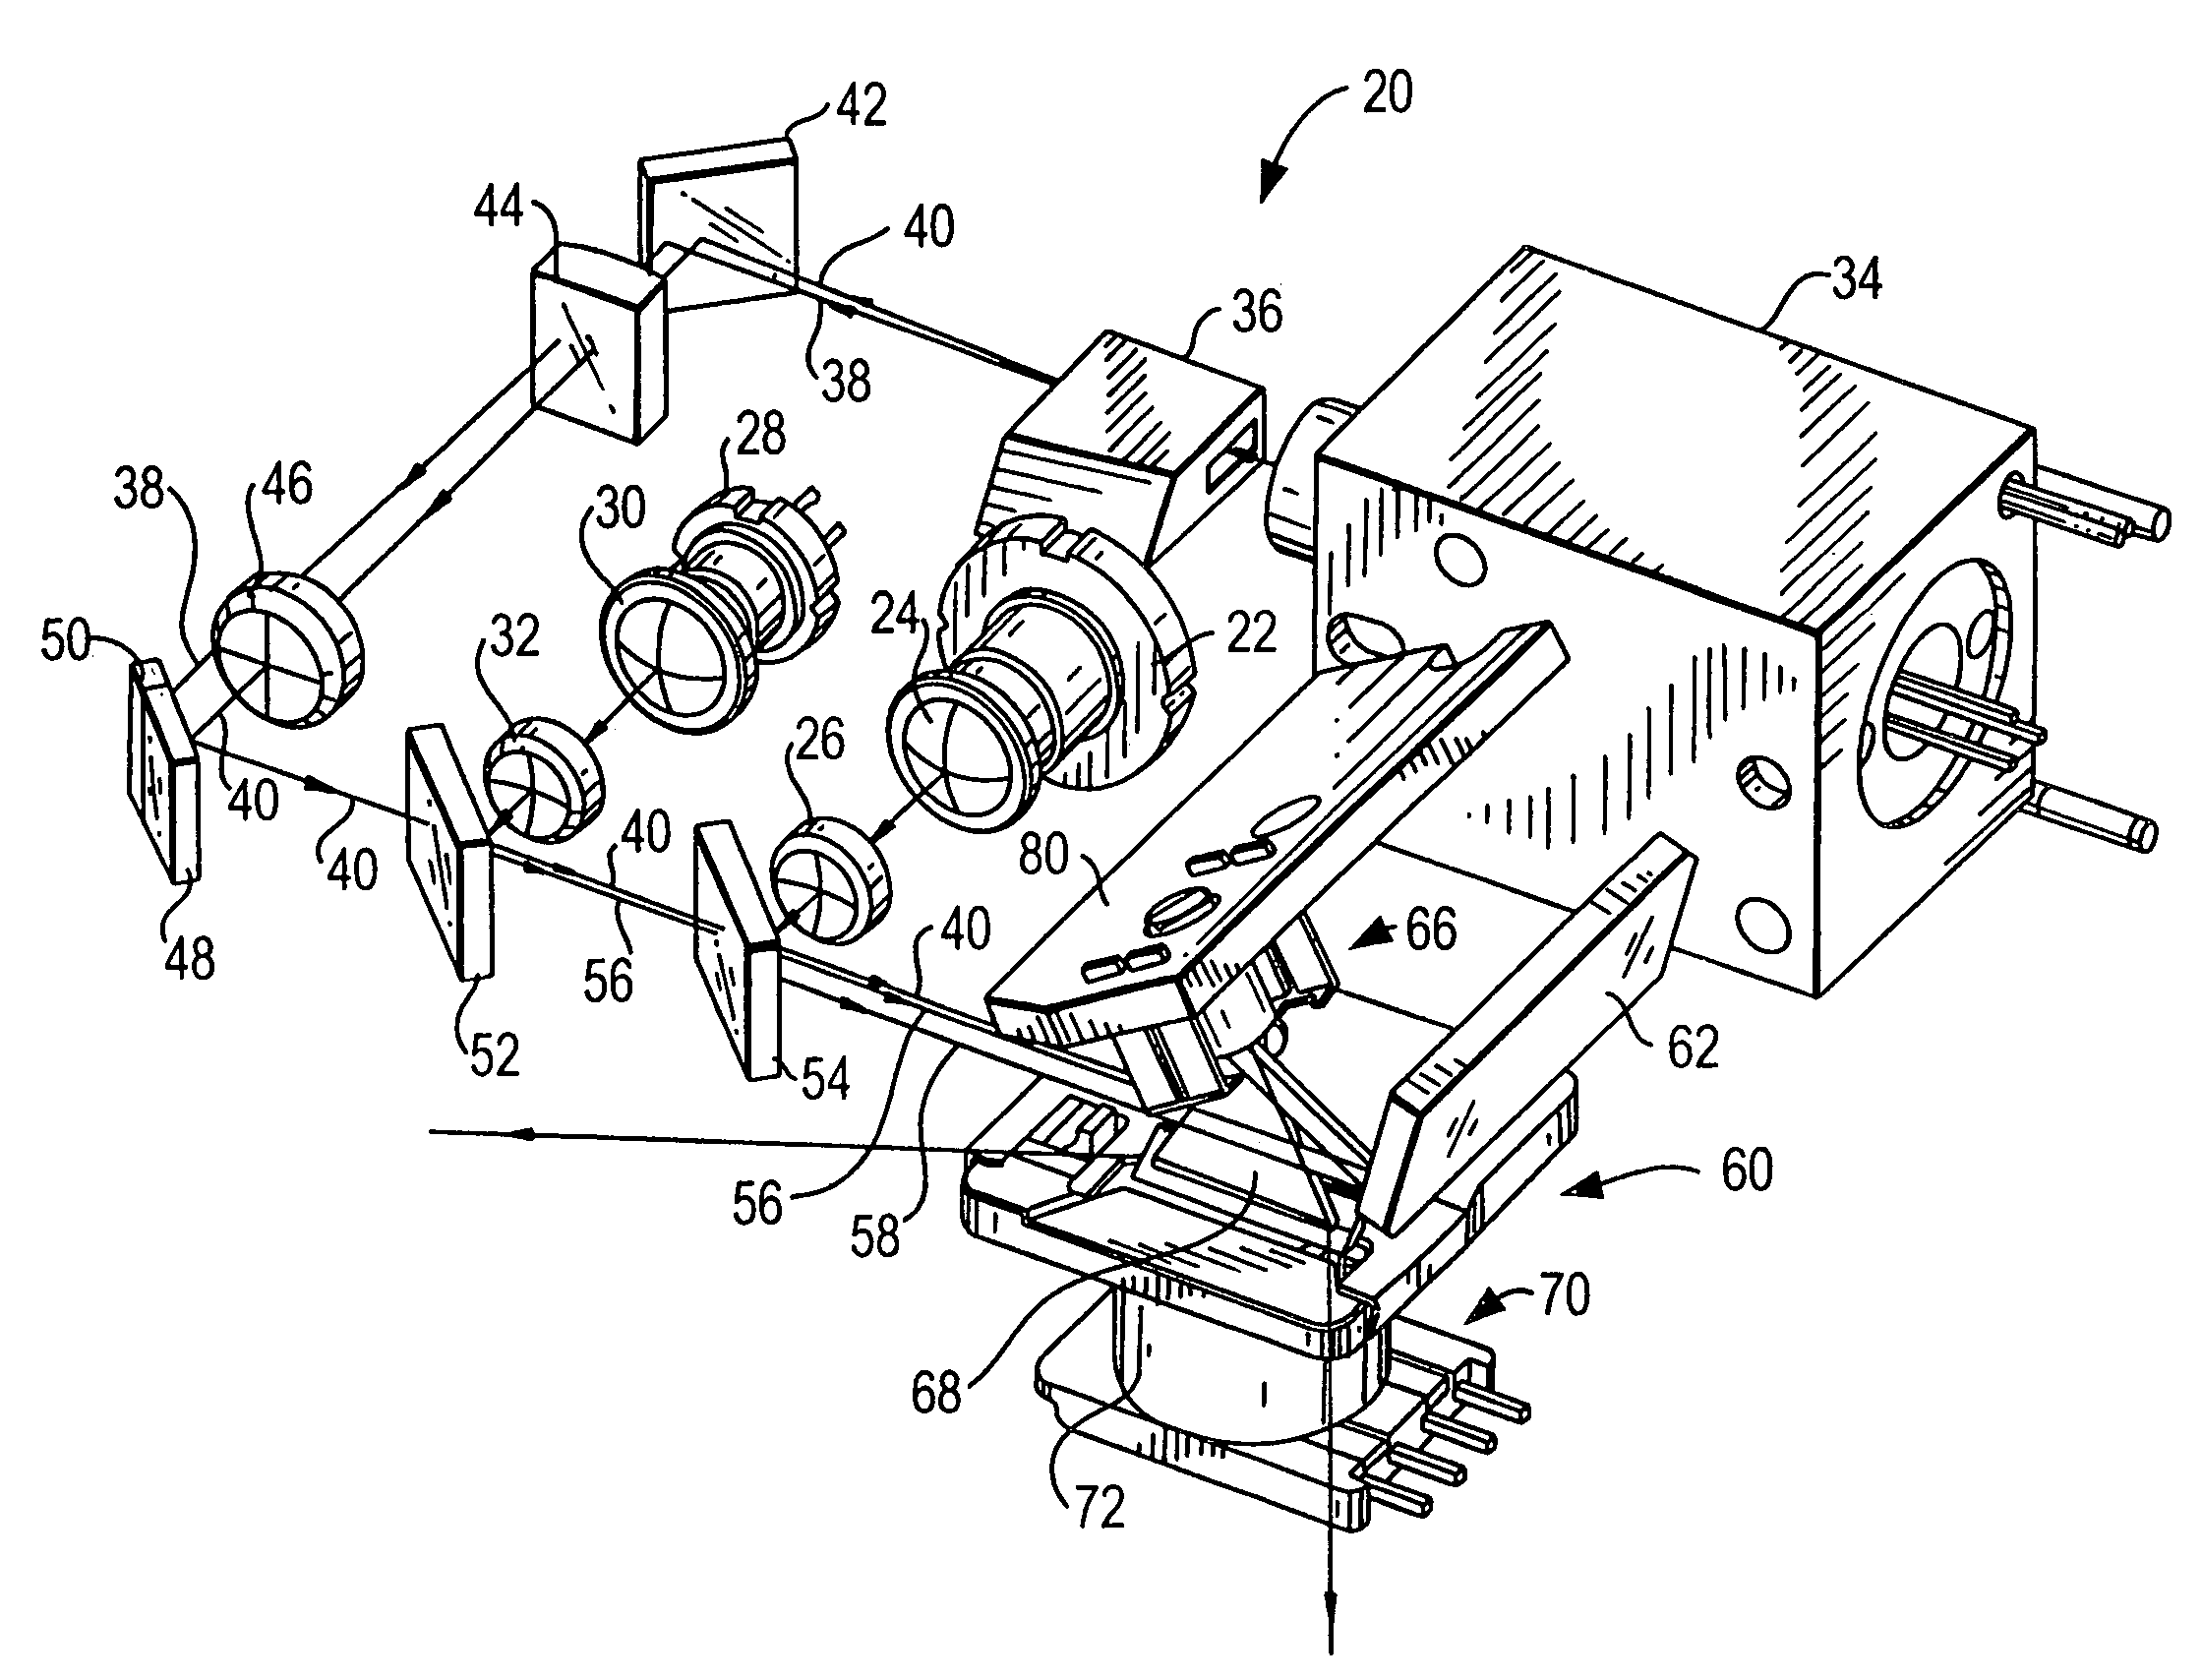 Compact acousto-optical modulator